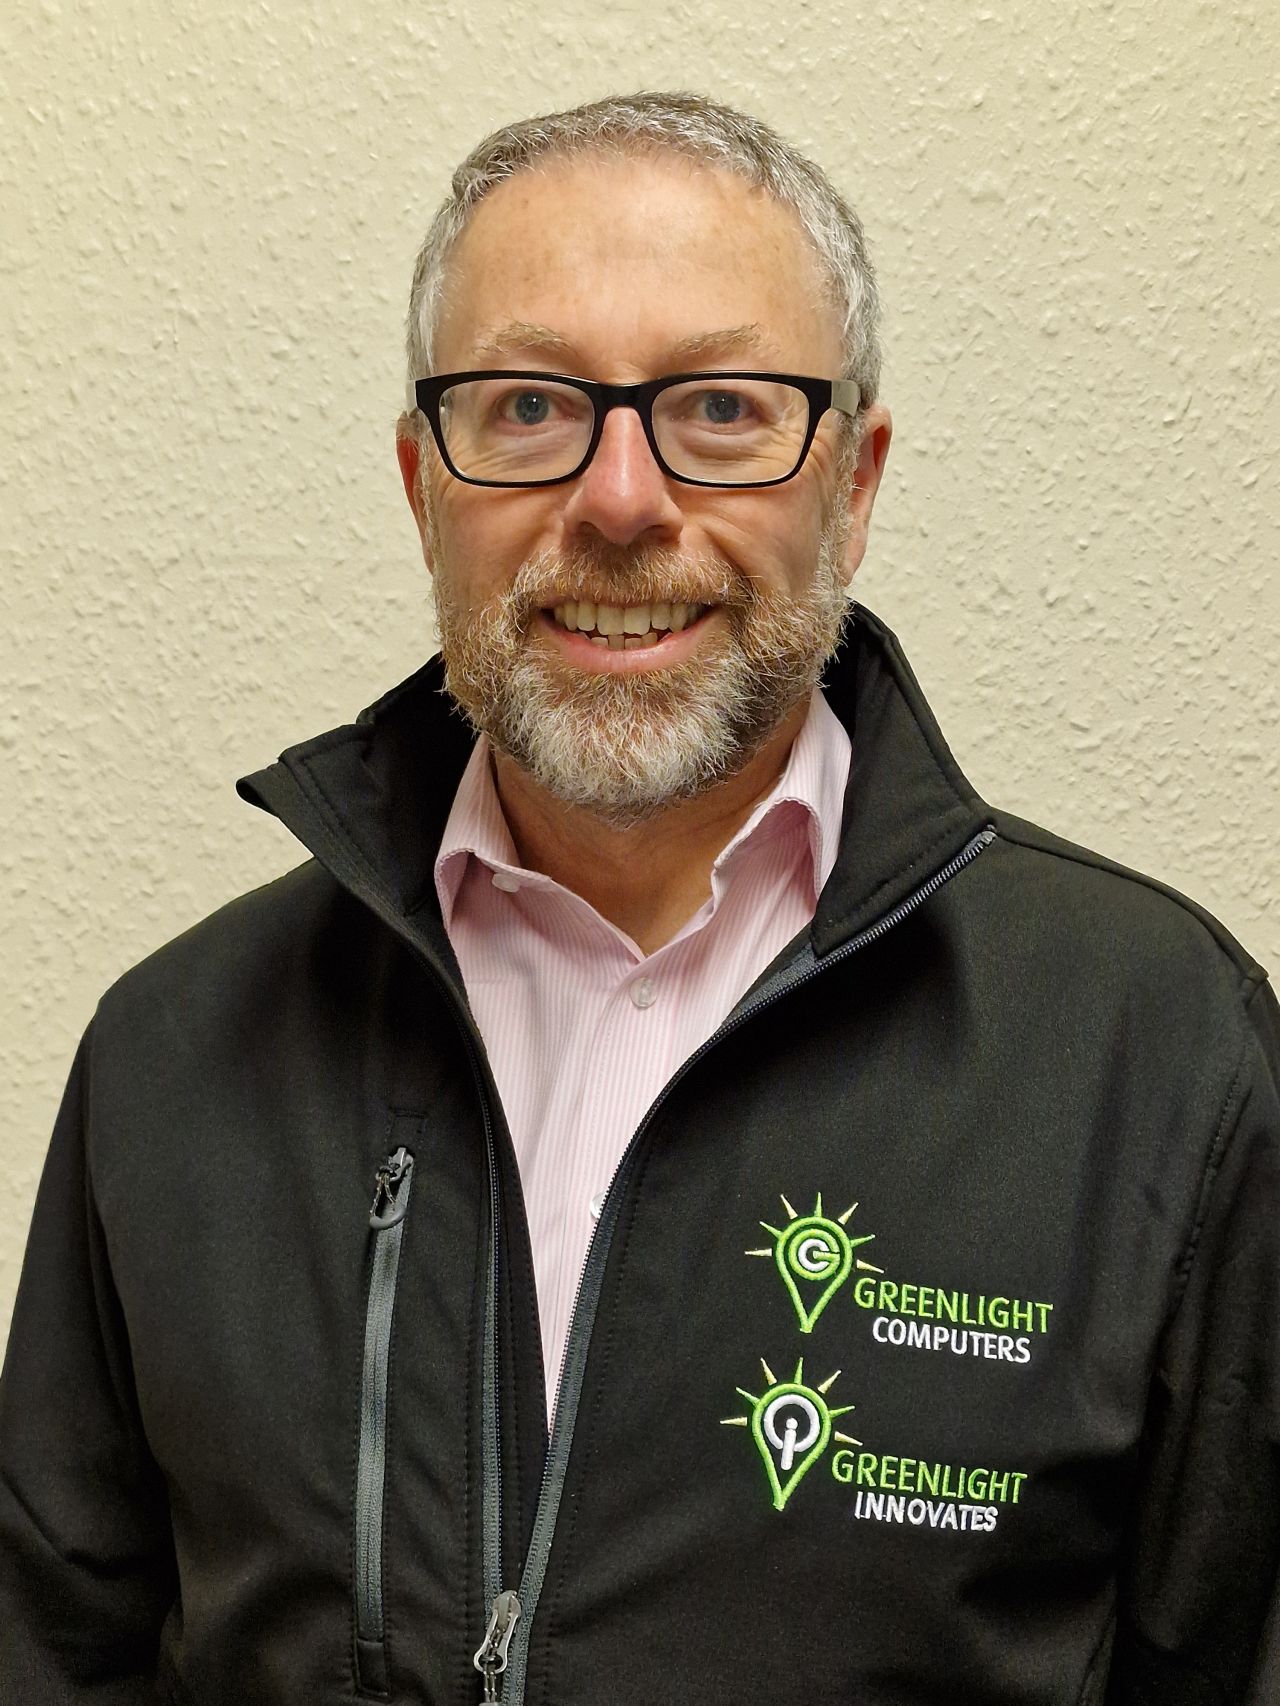 Gary in a Greenlight branded jacket